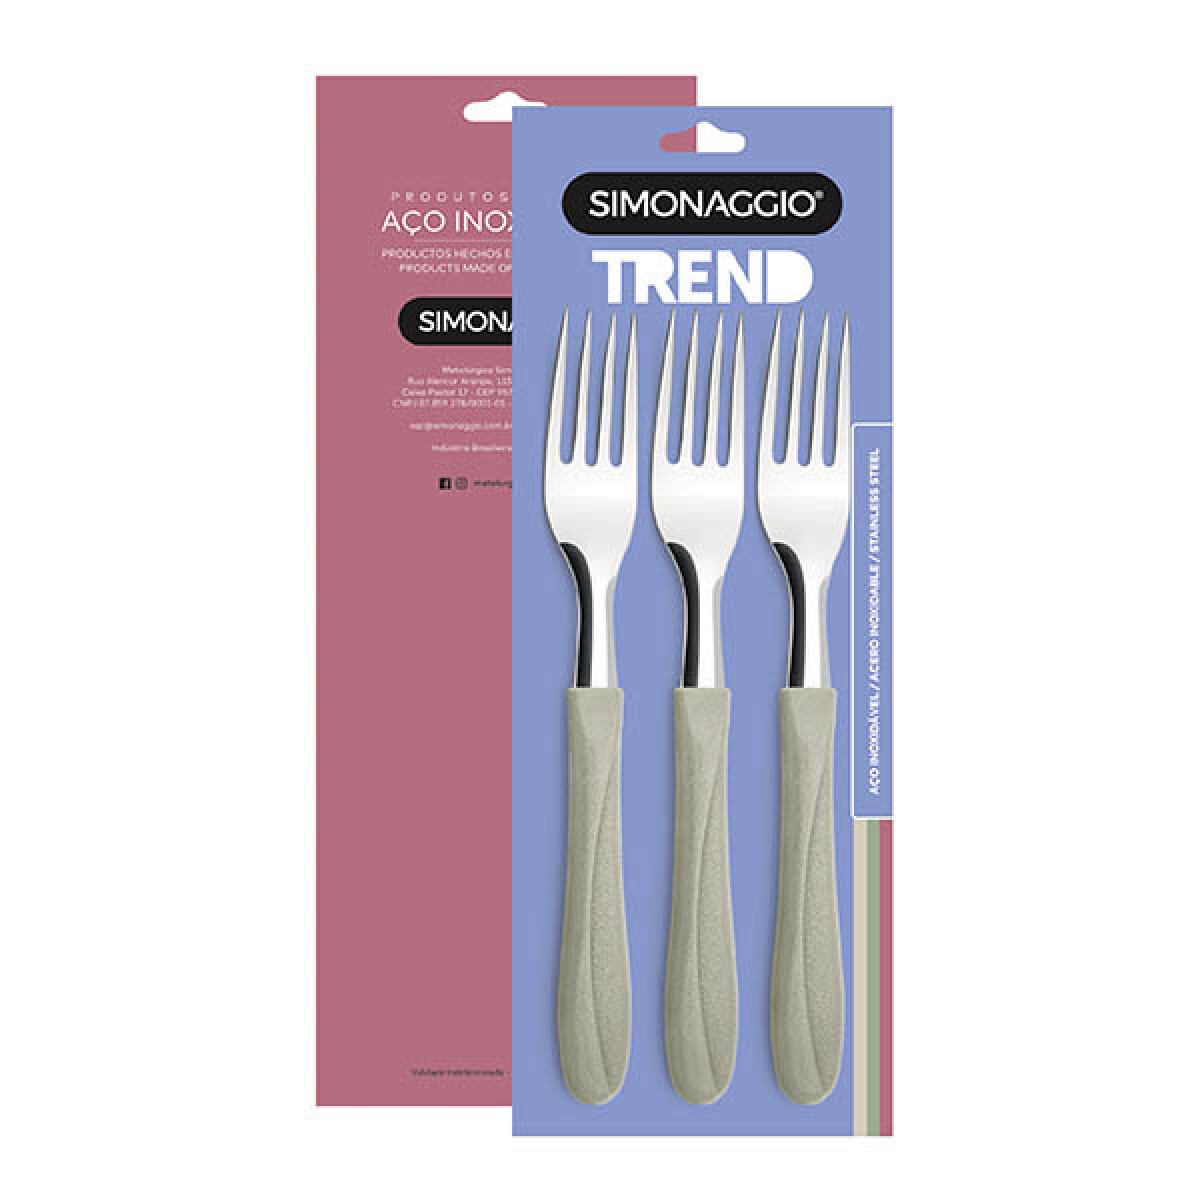 Set X3 Tenedores Trend de Simonaggio - Varios Colores - BEIGE 